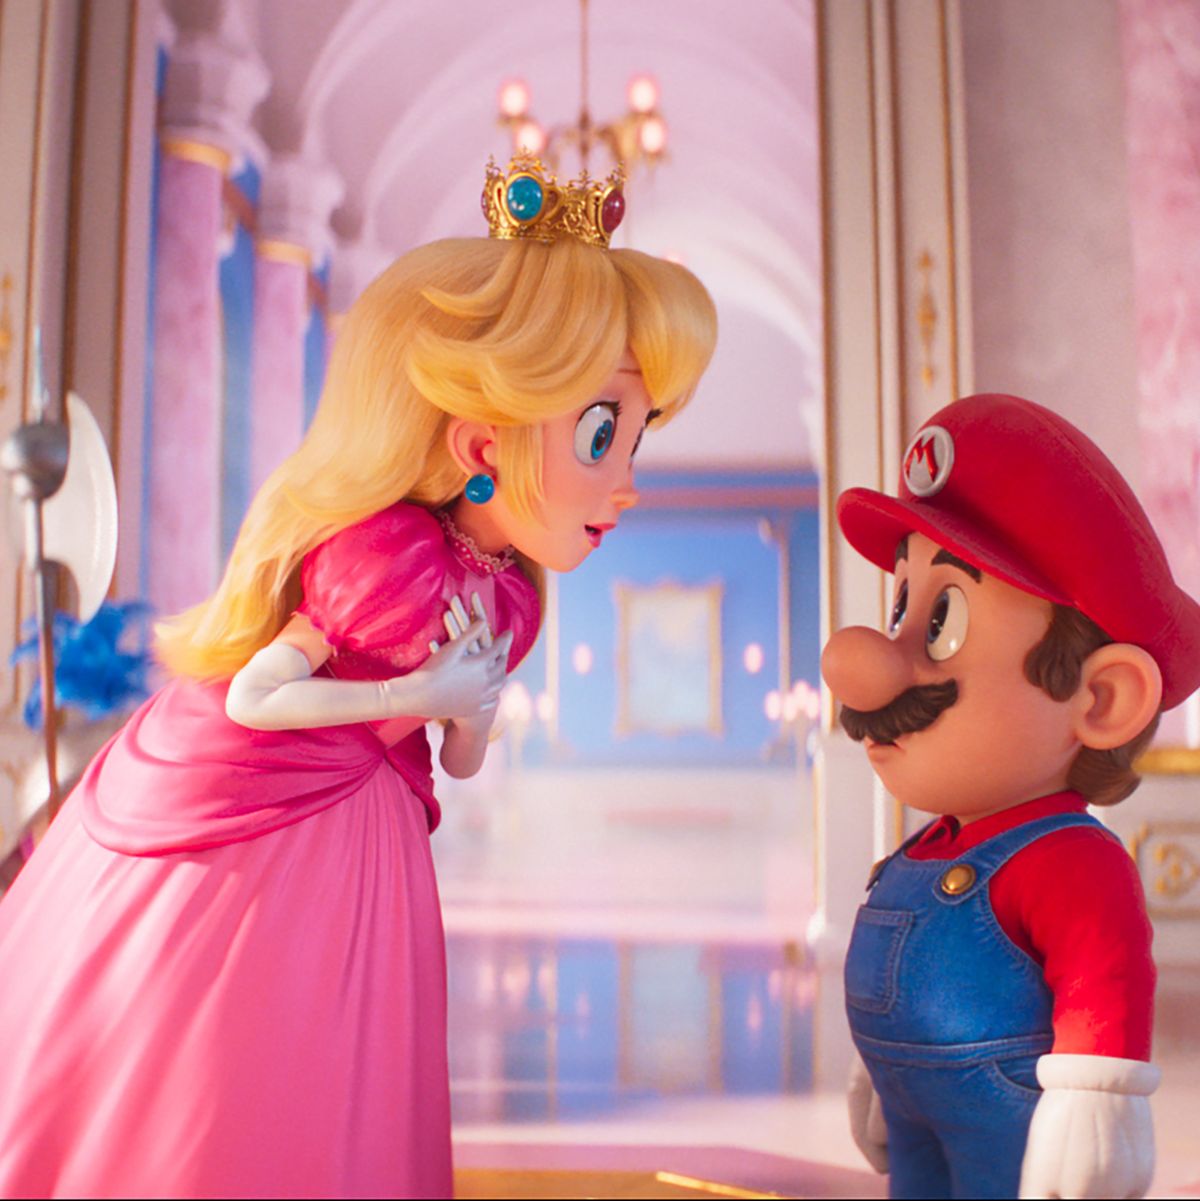 Chris Pratt's Super Mario Bros. movie officially delayed, Mario creator Shigeru  Miyamoto confirms via Nintendo's social media